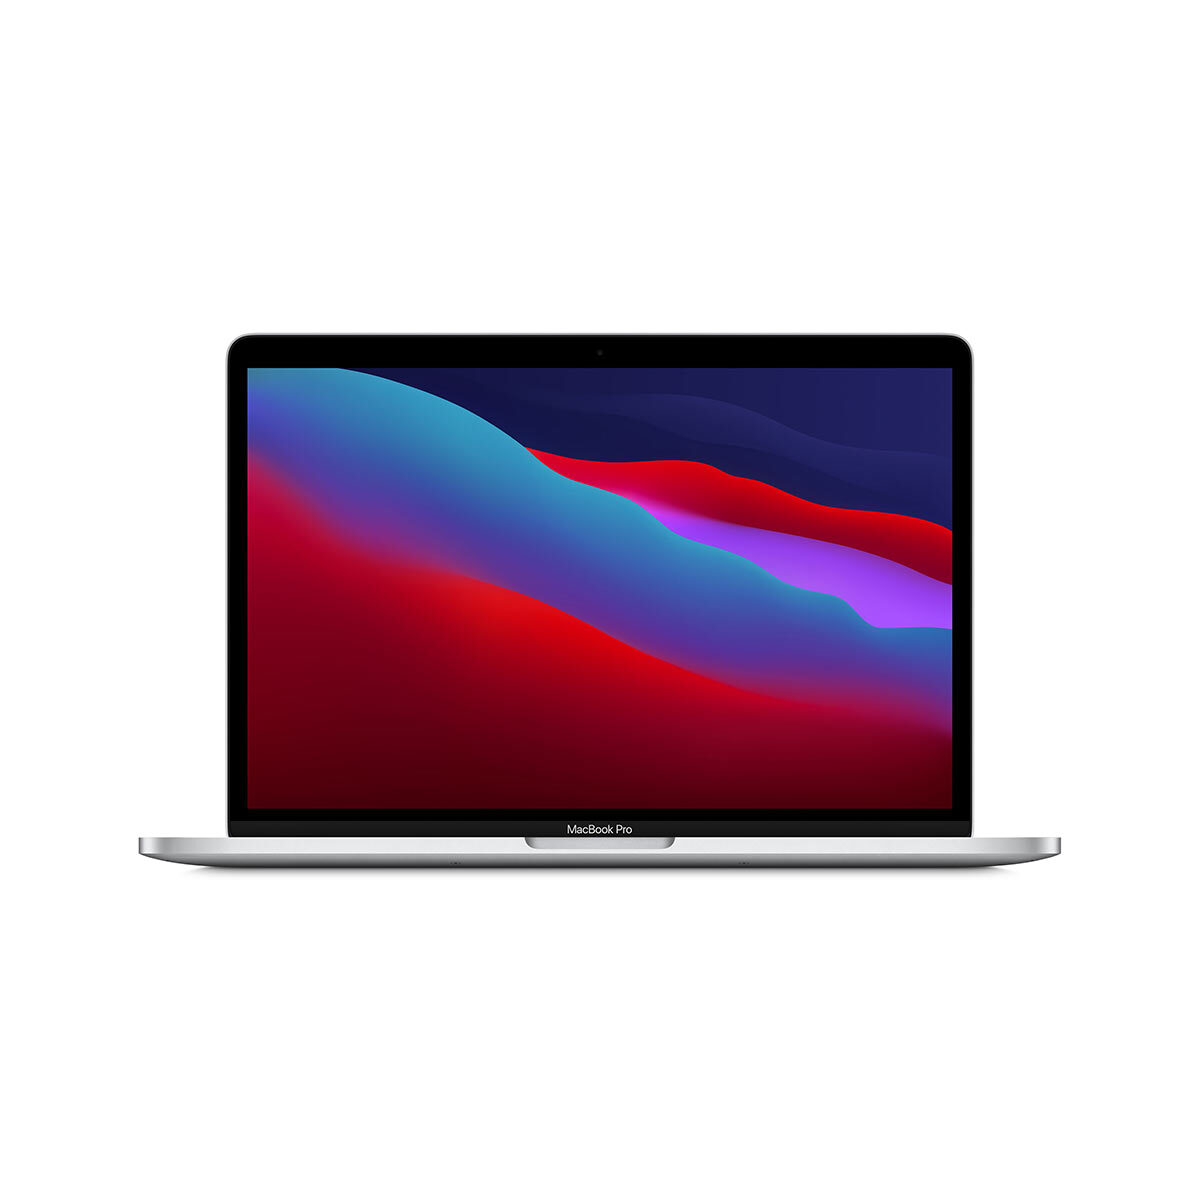 Buy Apple MacBook Pro 2020, Apple M1 Chip, 8GB RAM, 256GB SSD, 13.3 Inch at costco.co.uk